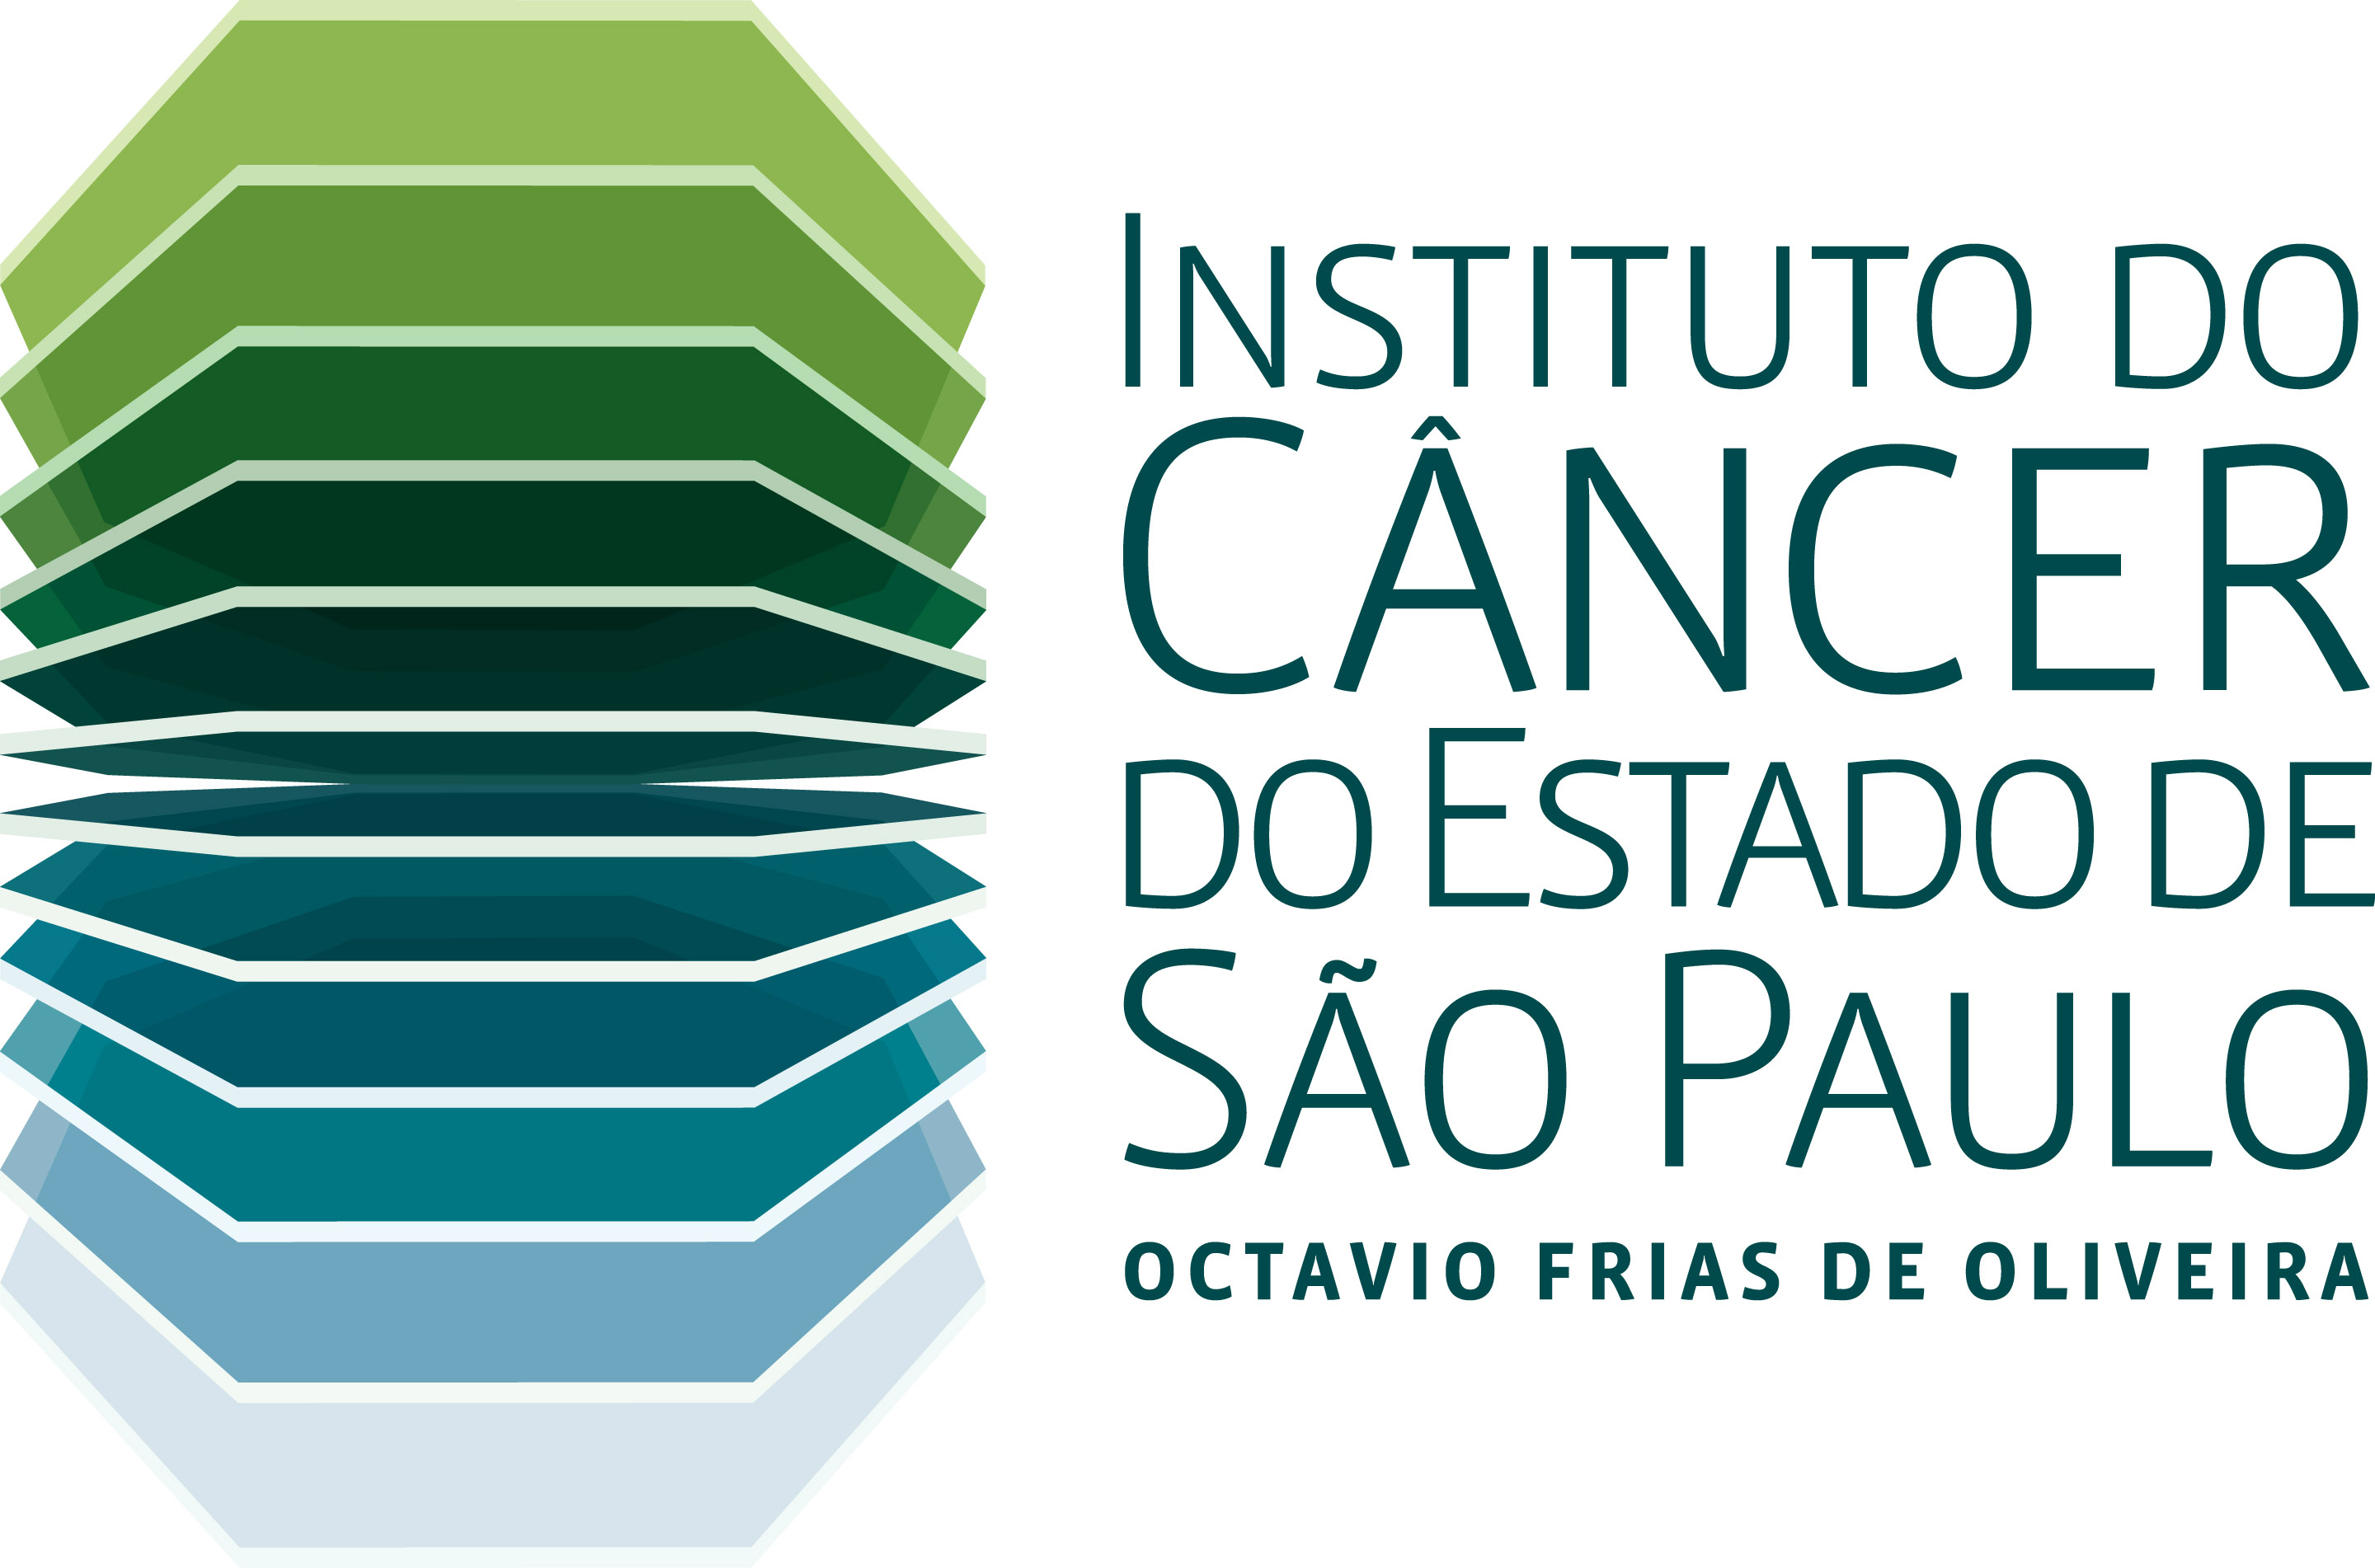 HPV Institute at Instituto do Cancer do Estado de Sao Paulo - Brazil